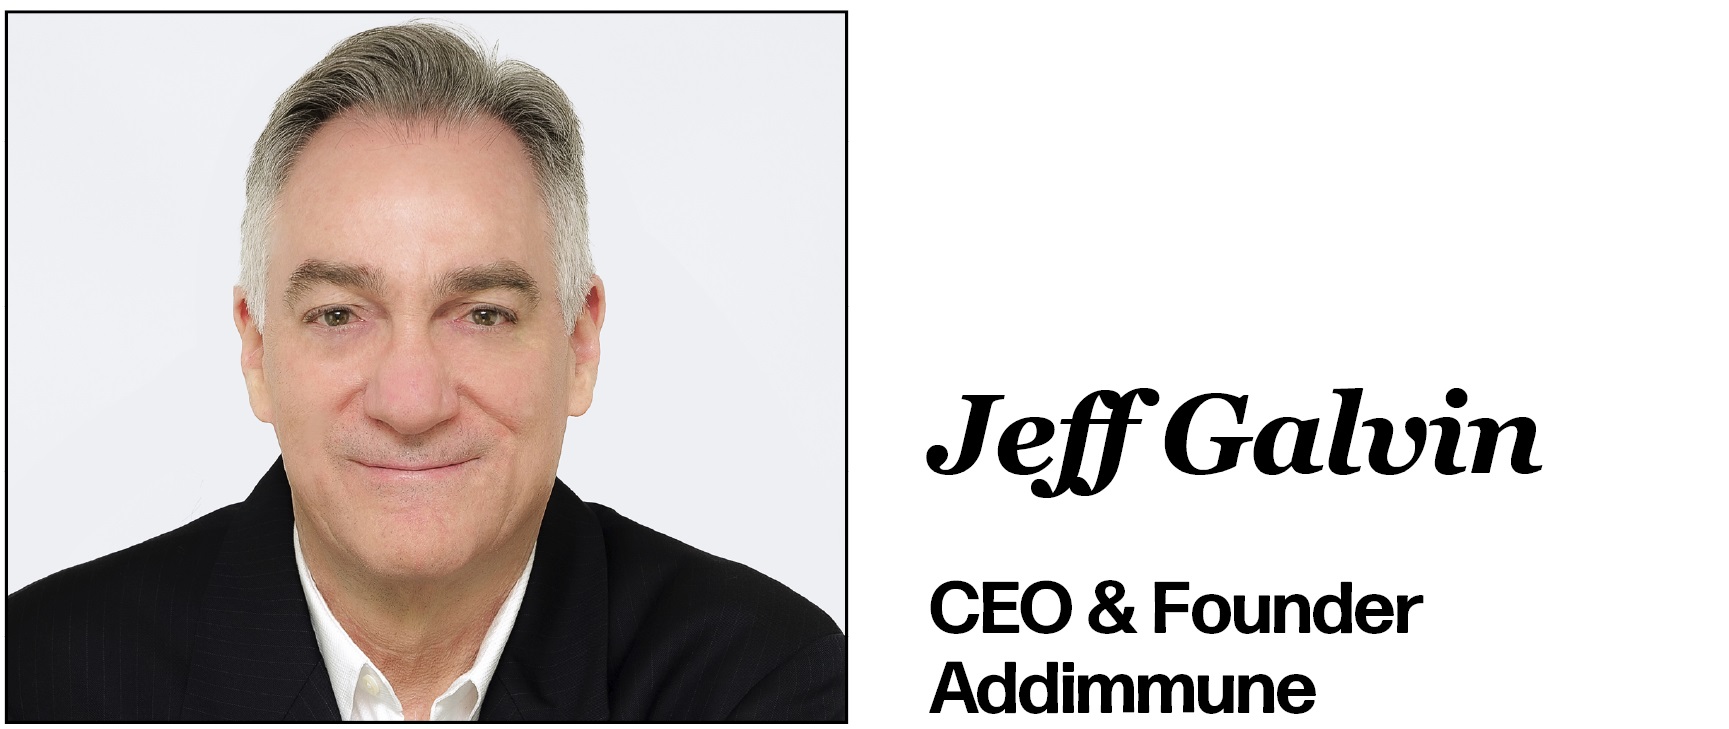 Jeff Galvin CEO & Founder Addimmune